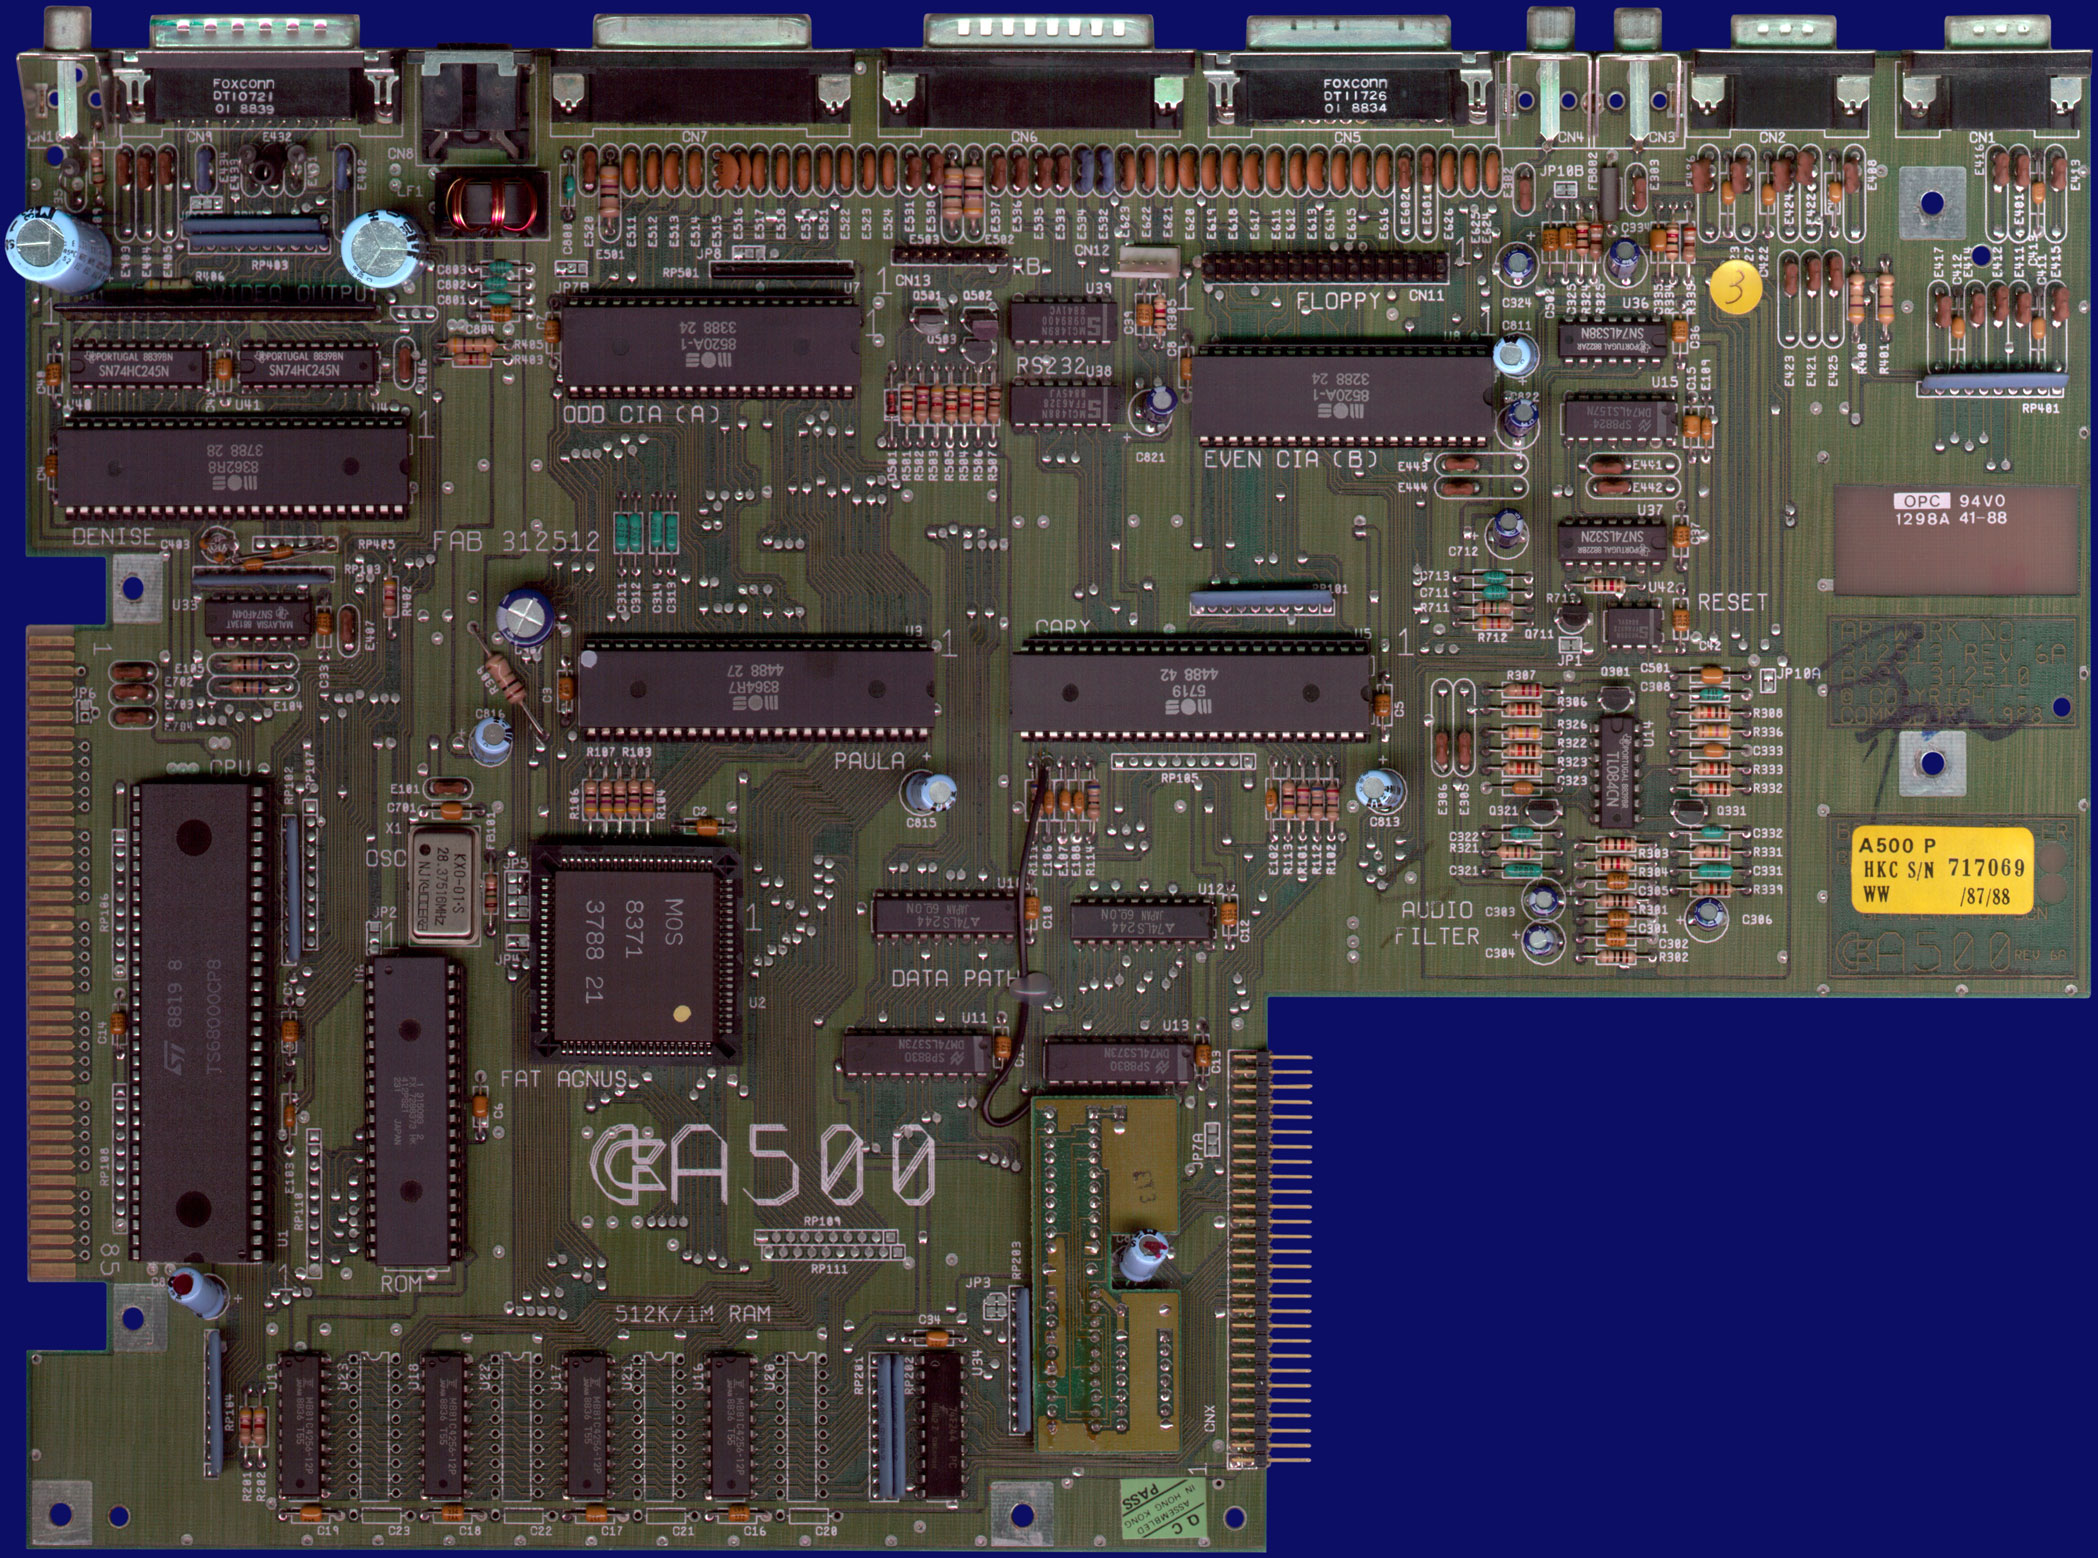 Commodore Amiga 500 & 500+ - Rev 6A motherboard, front side